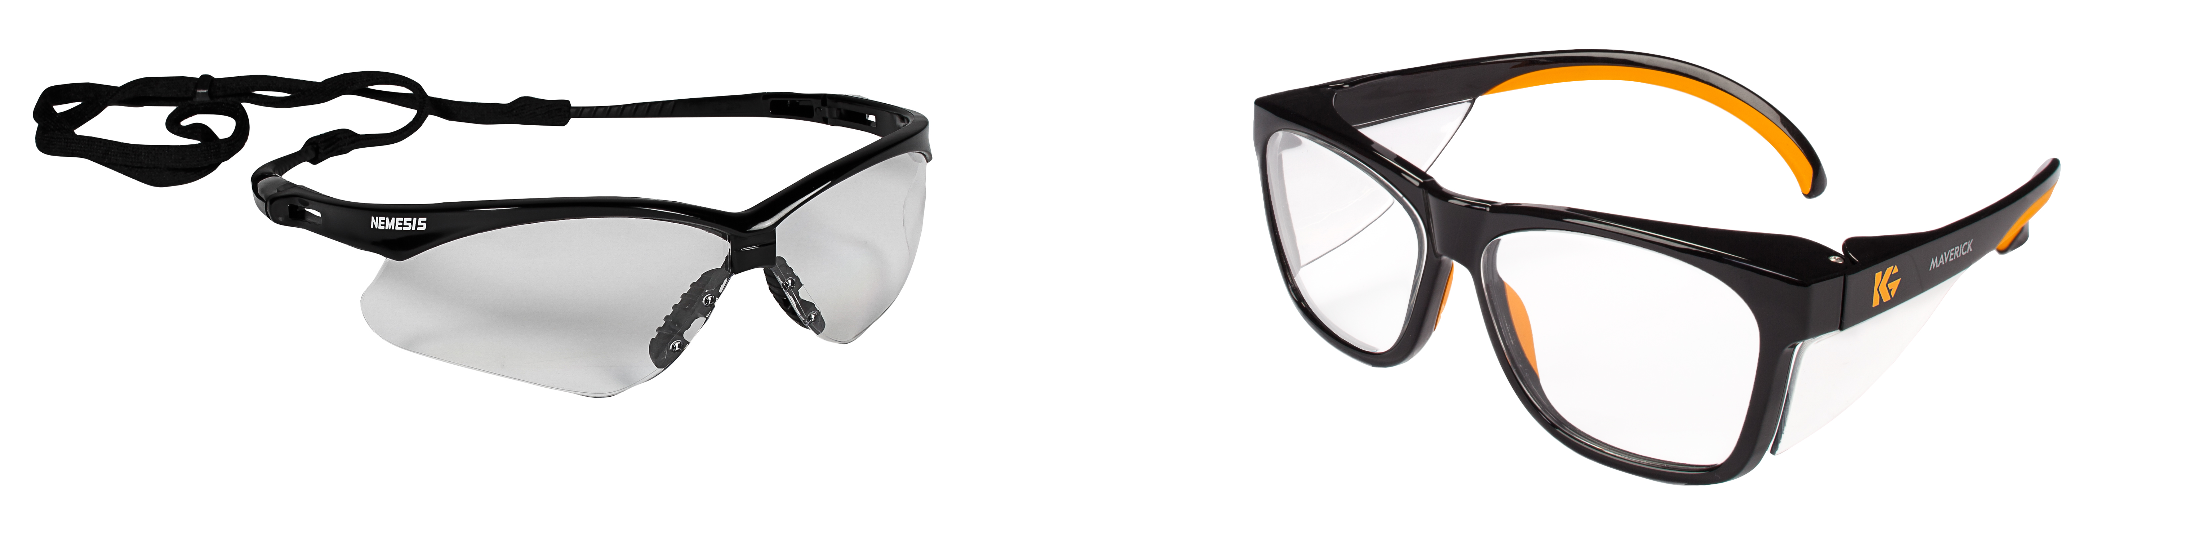 Nemesis™ (left) and KleenGuard™ Maverick™ (right) eye protection